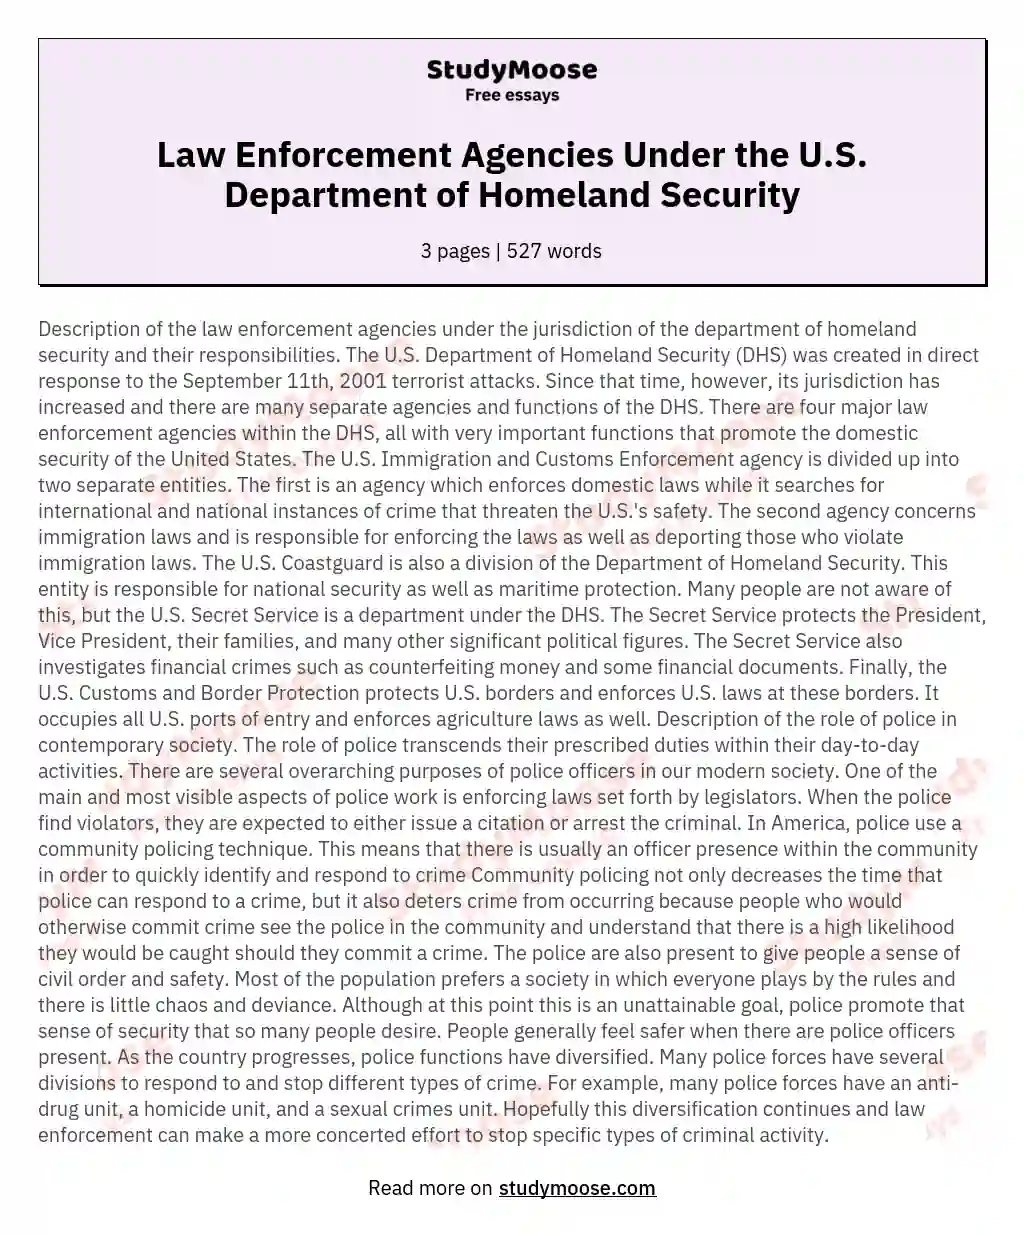 Law Enforcement Agencies Under the U.S. Department of Homeland Security essay